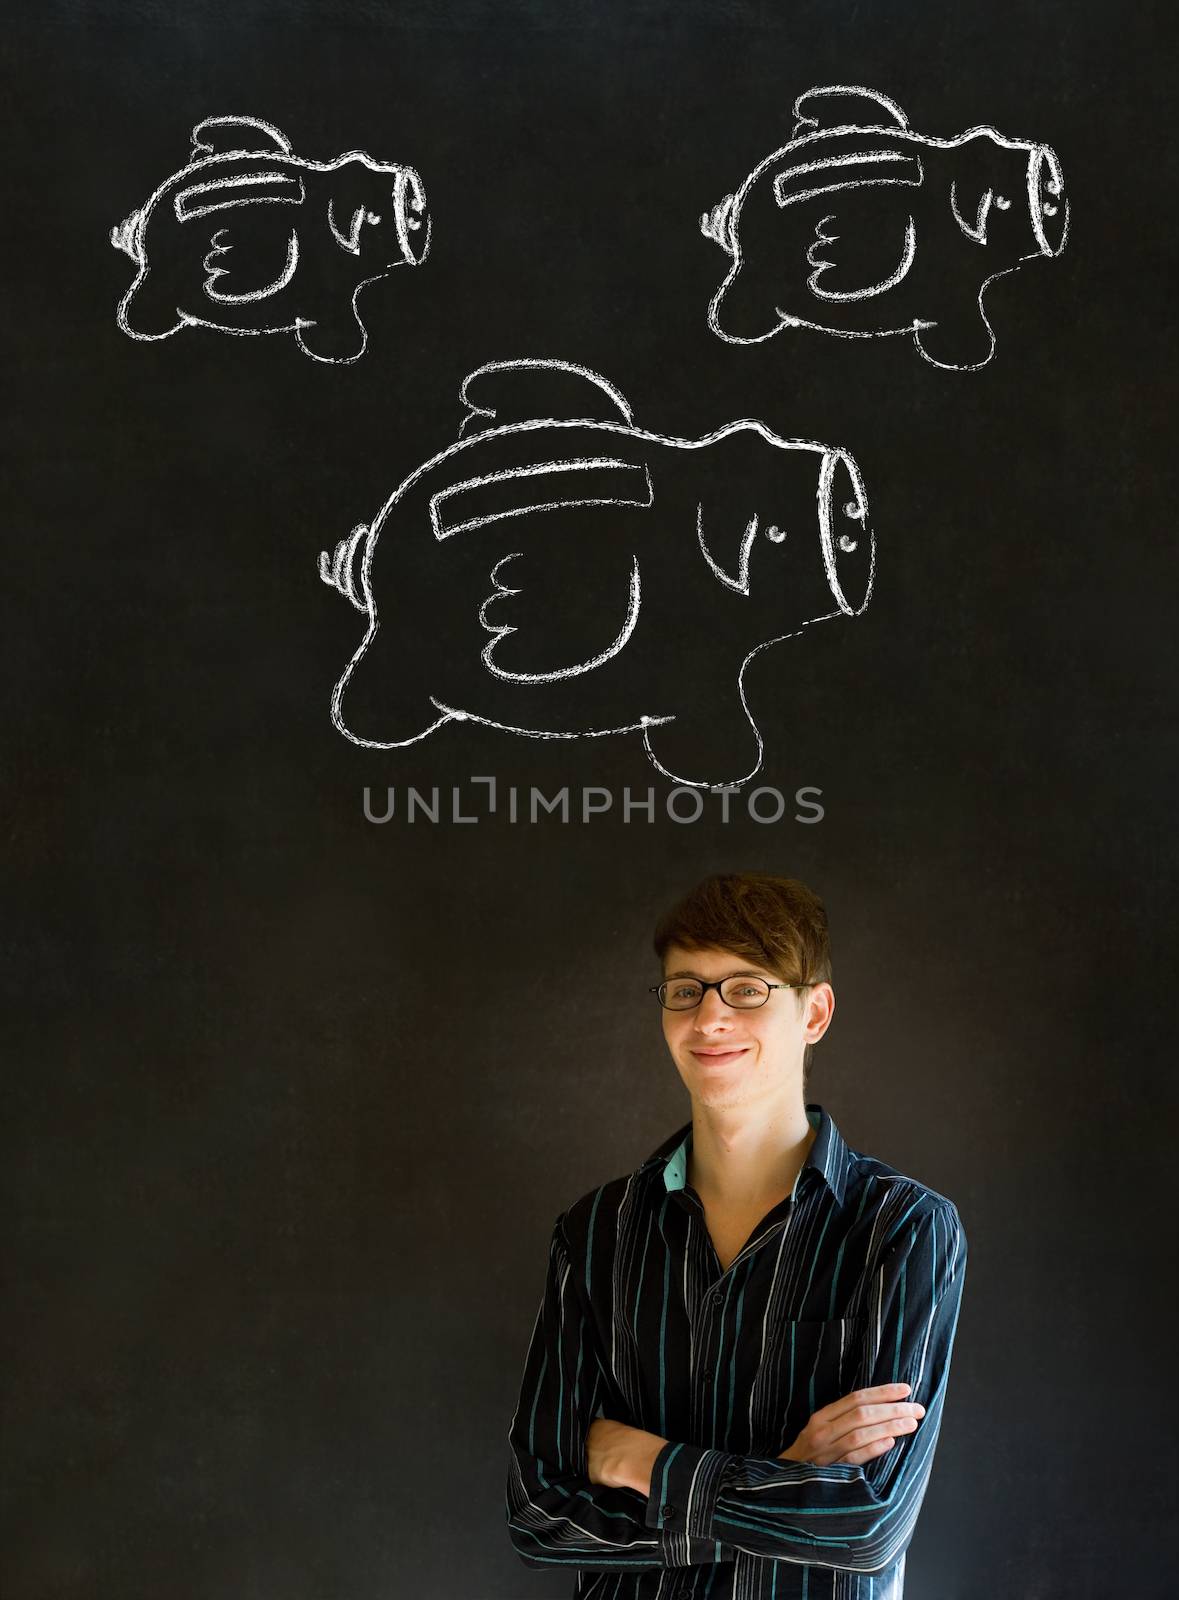 Businessman, student or teacher with chalk piggie banks  concept blackboard background